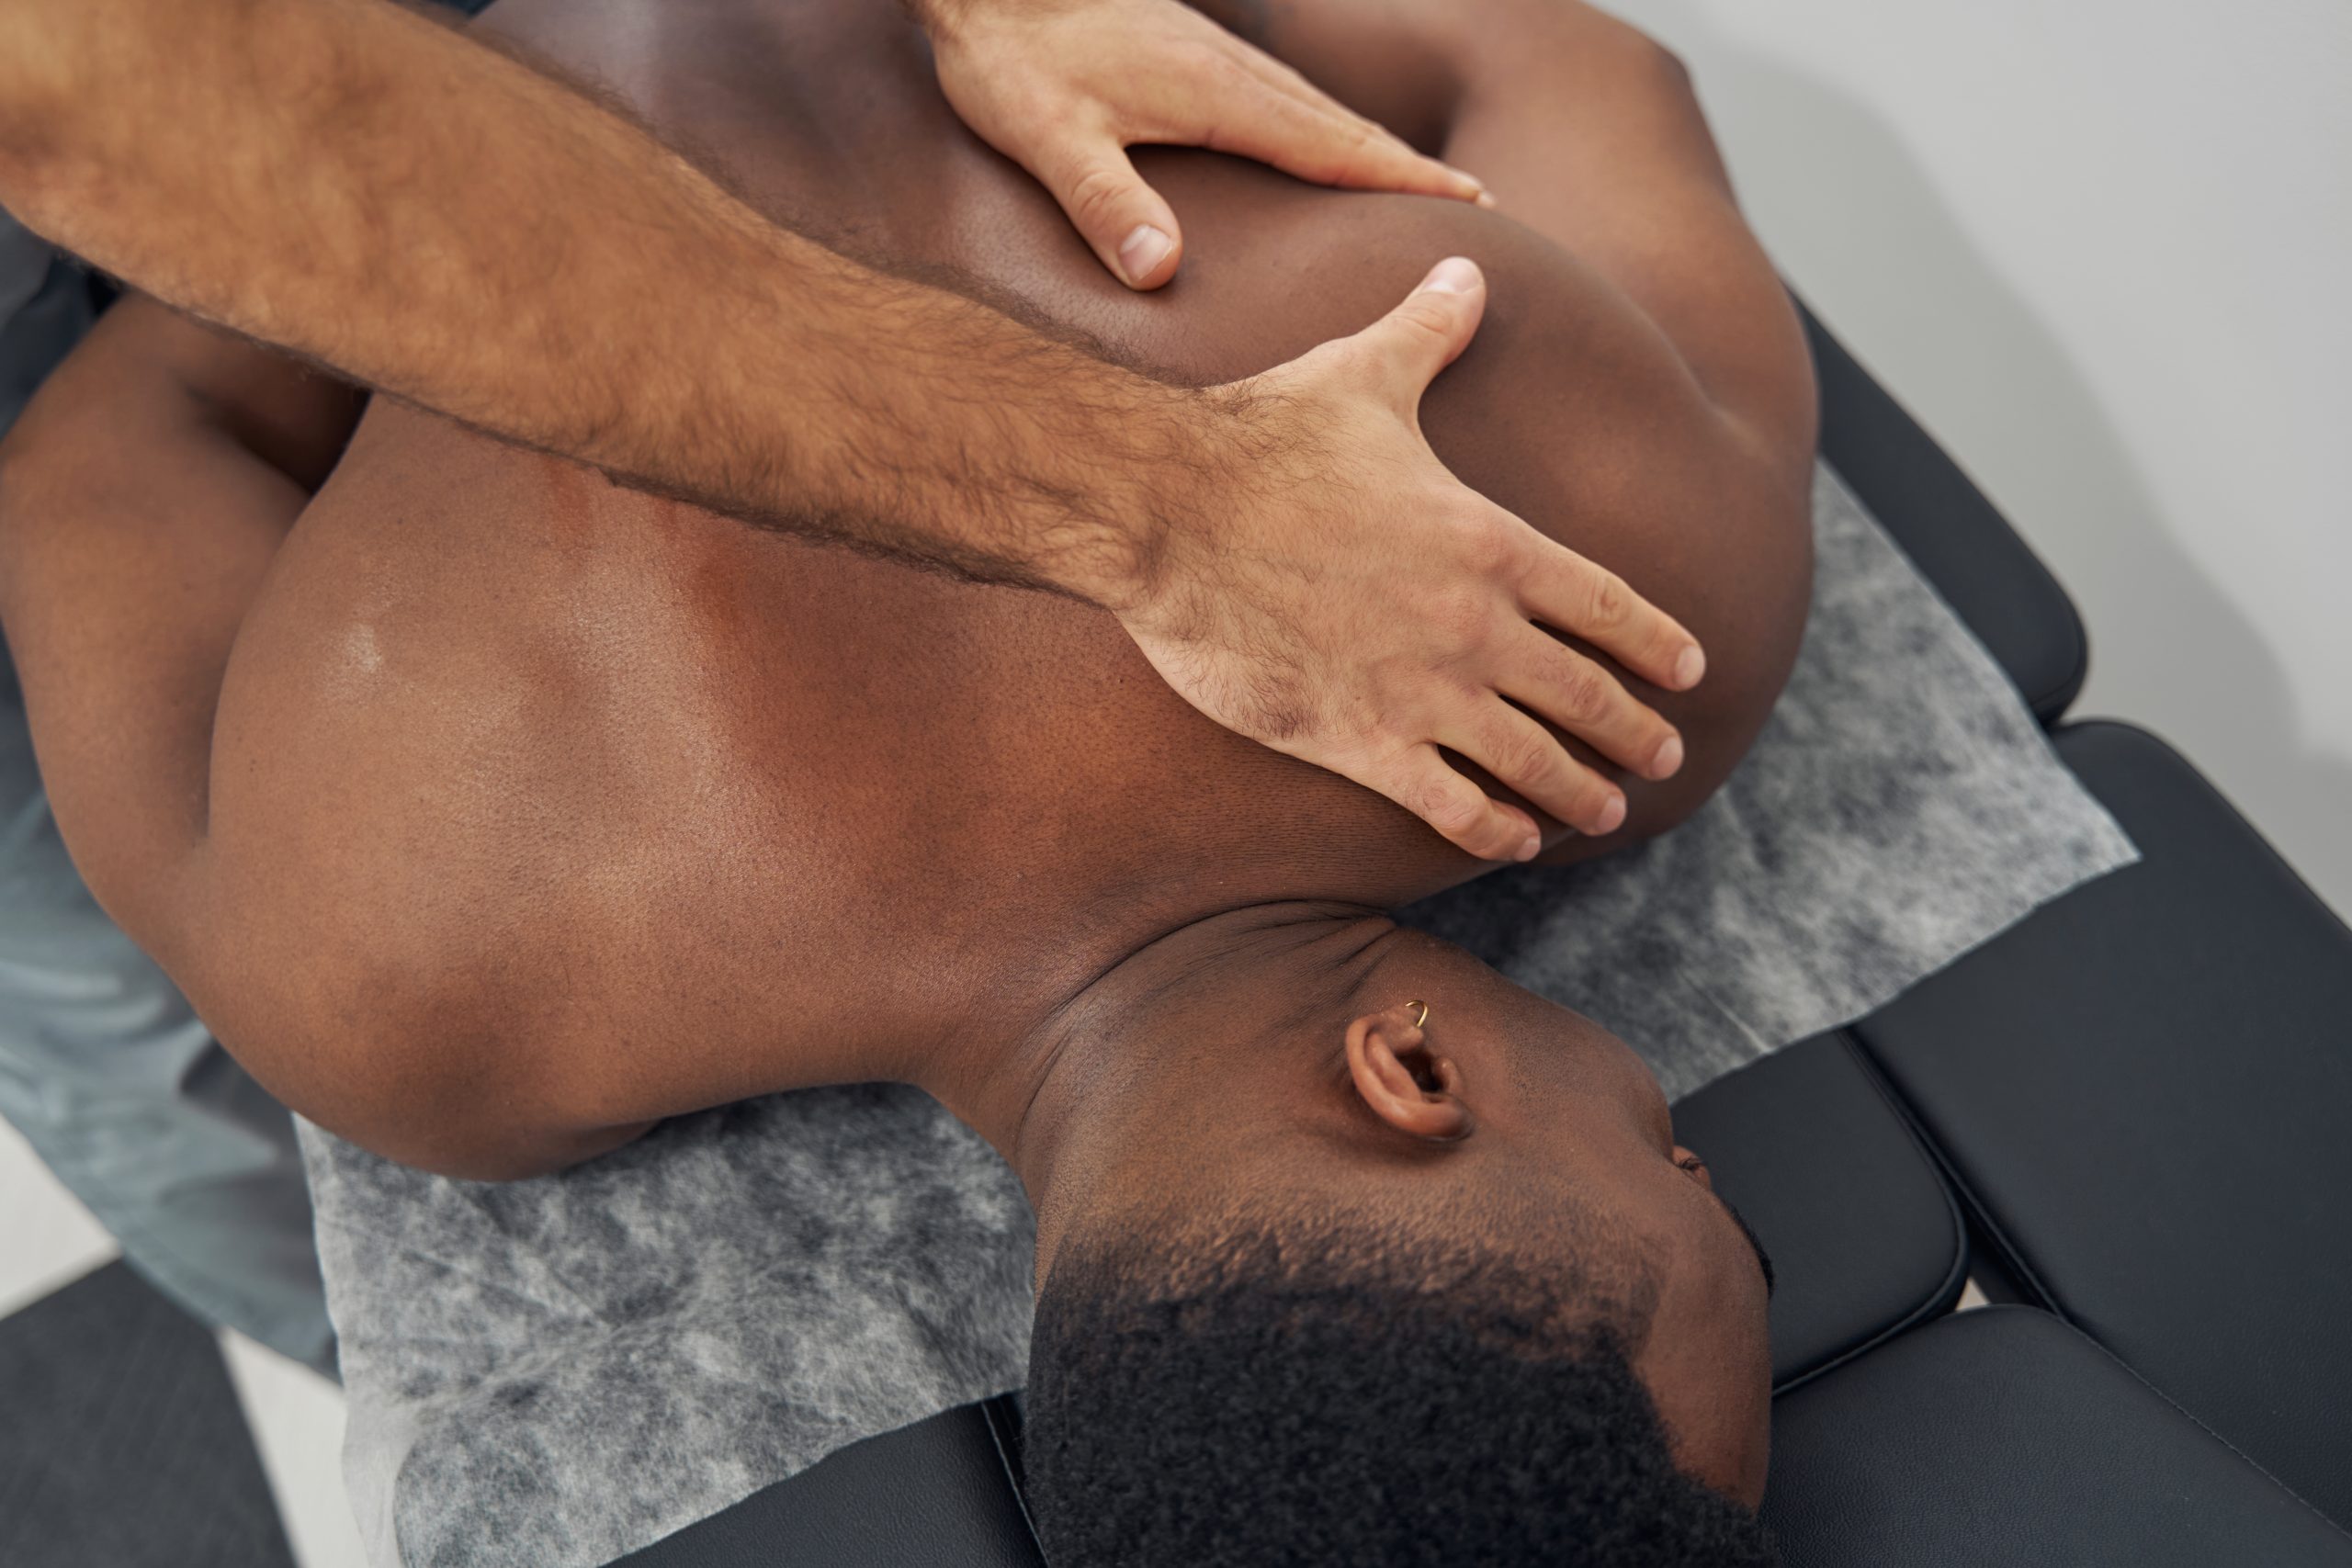 https://anchortohealth.com/wp-content/uploads/2022/03/male-patient-having-his-upper-back-massaged-2022-01-04-22-04-53-utc-scaled.jpg